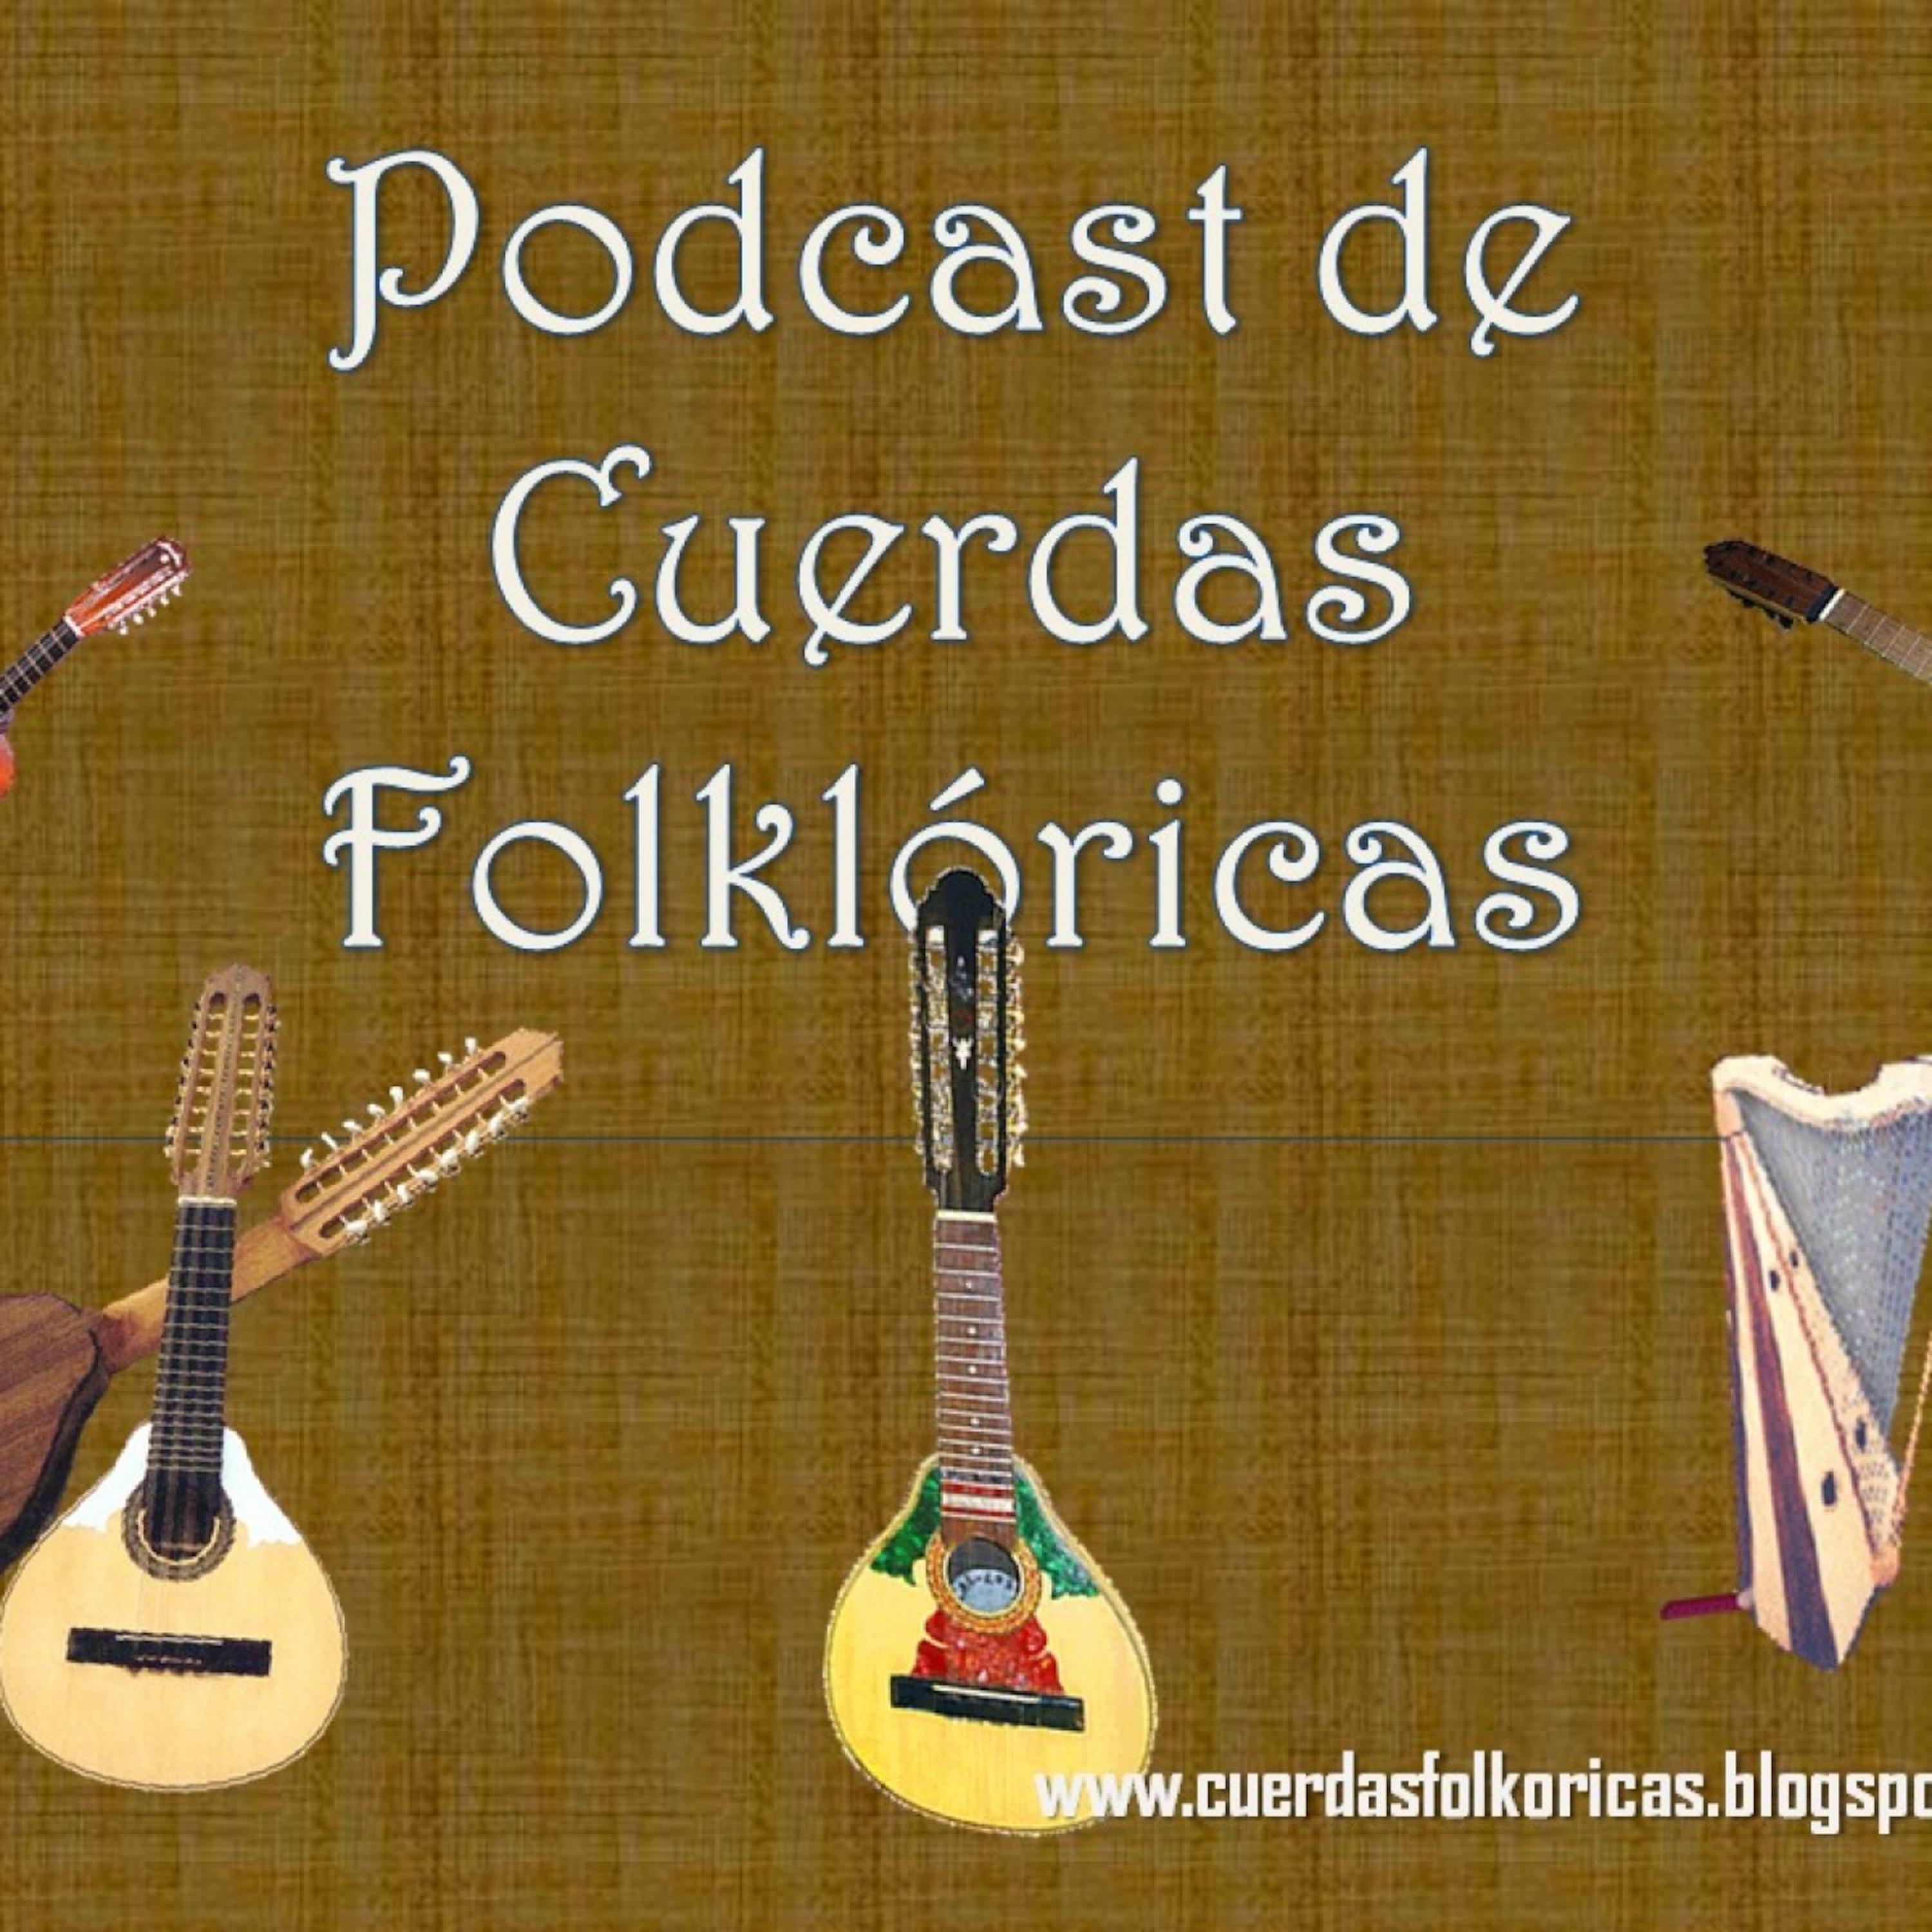 Podcast de Cuerdas Folkloricas